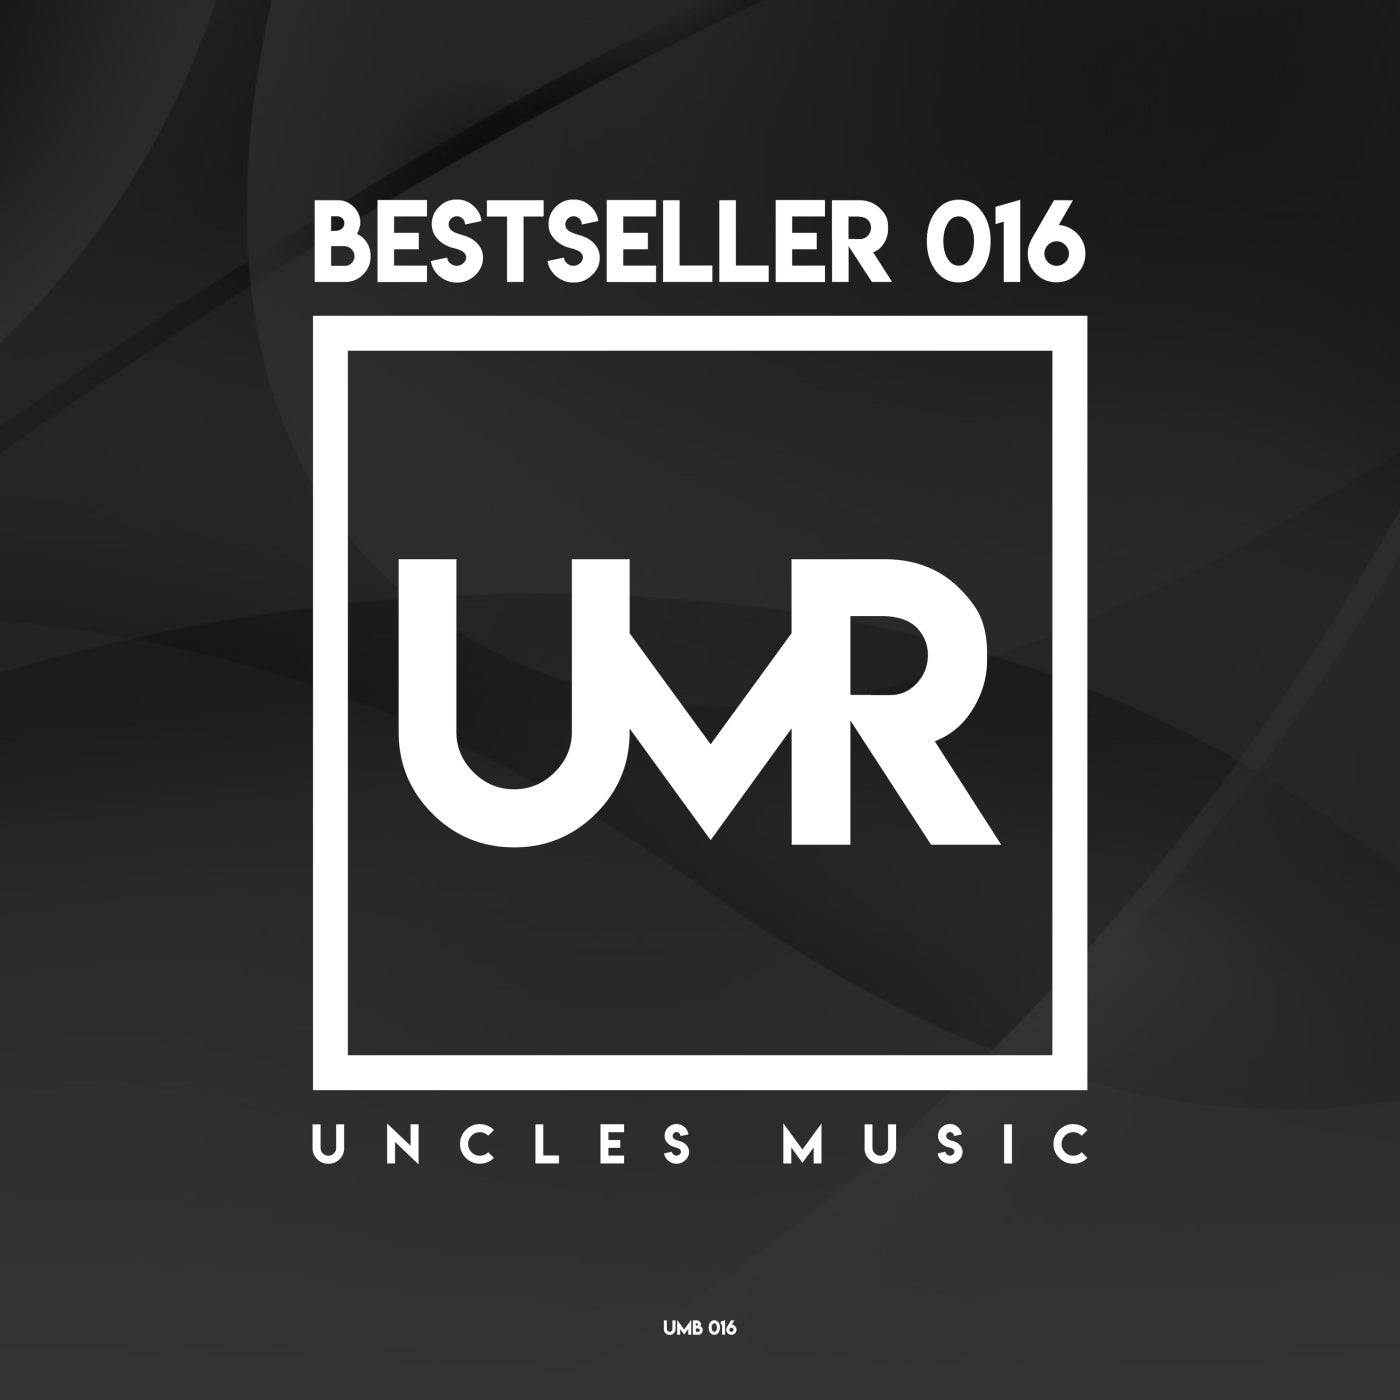 Uncles Music "Bestseller 016"